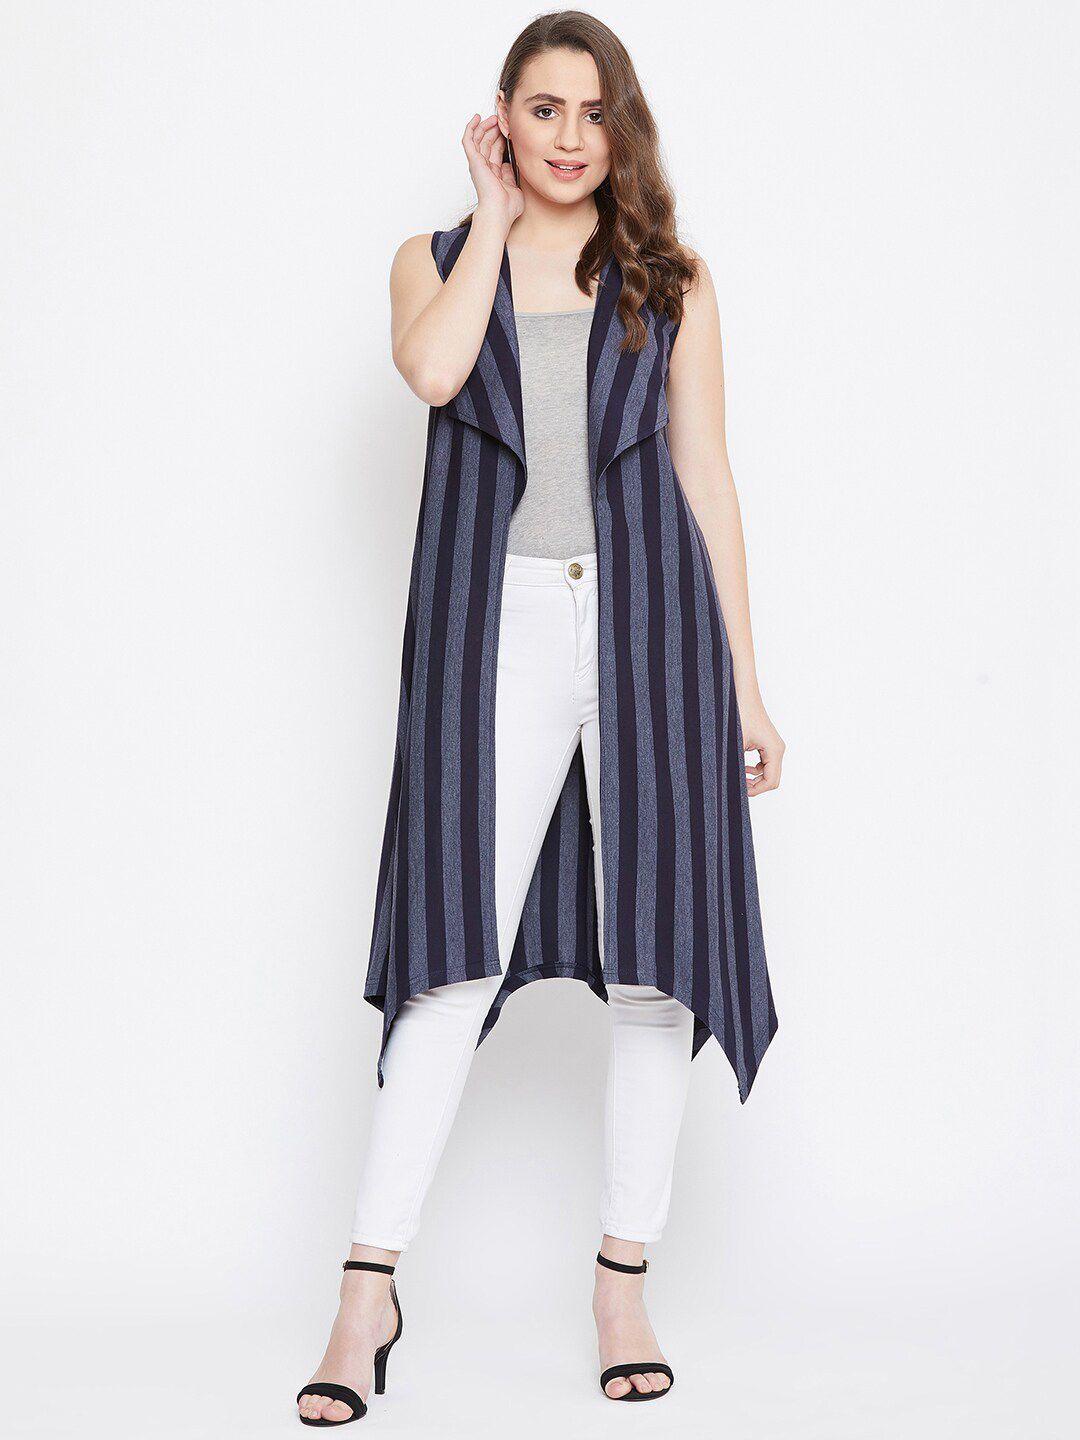 hypernation women blue & grey striped cotton blend longline shrug